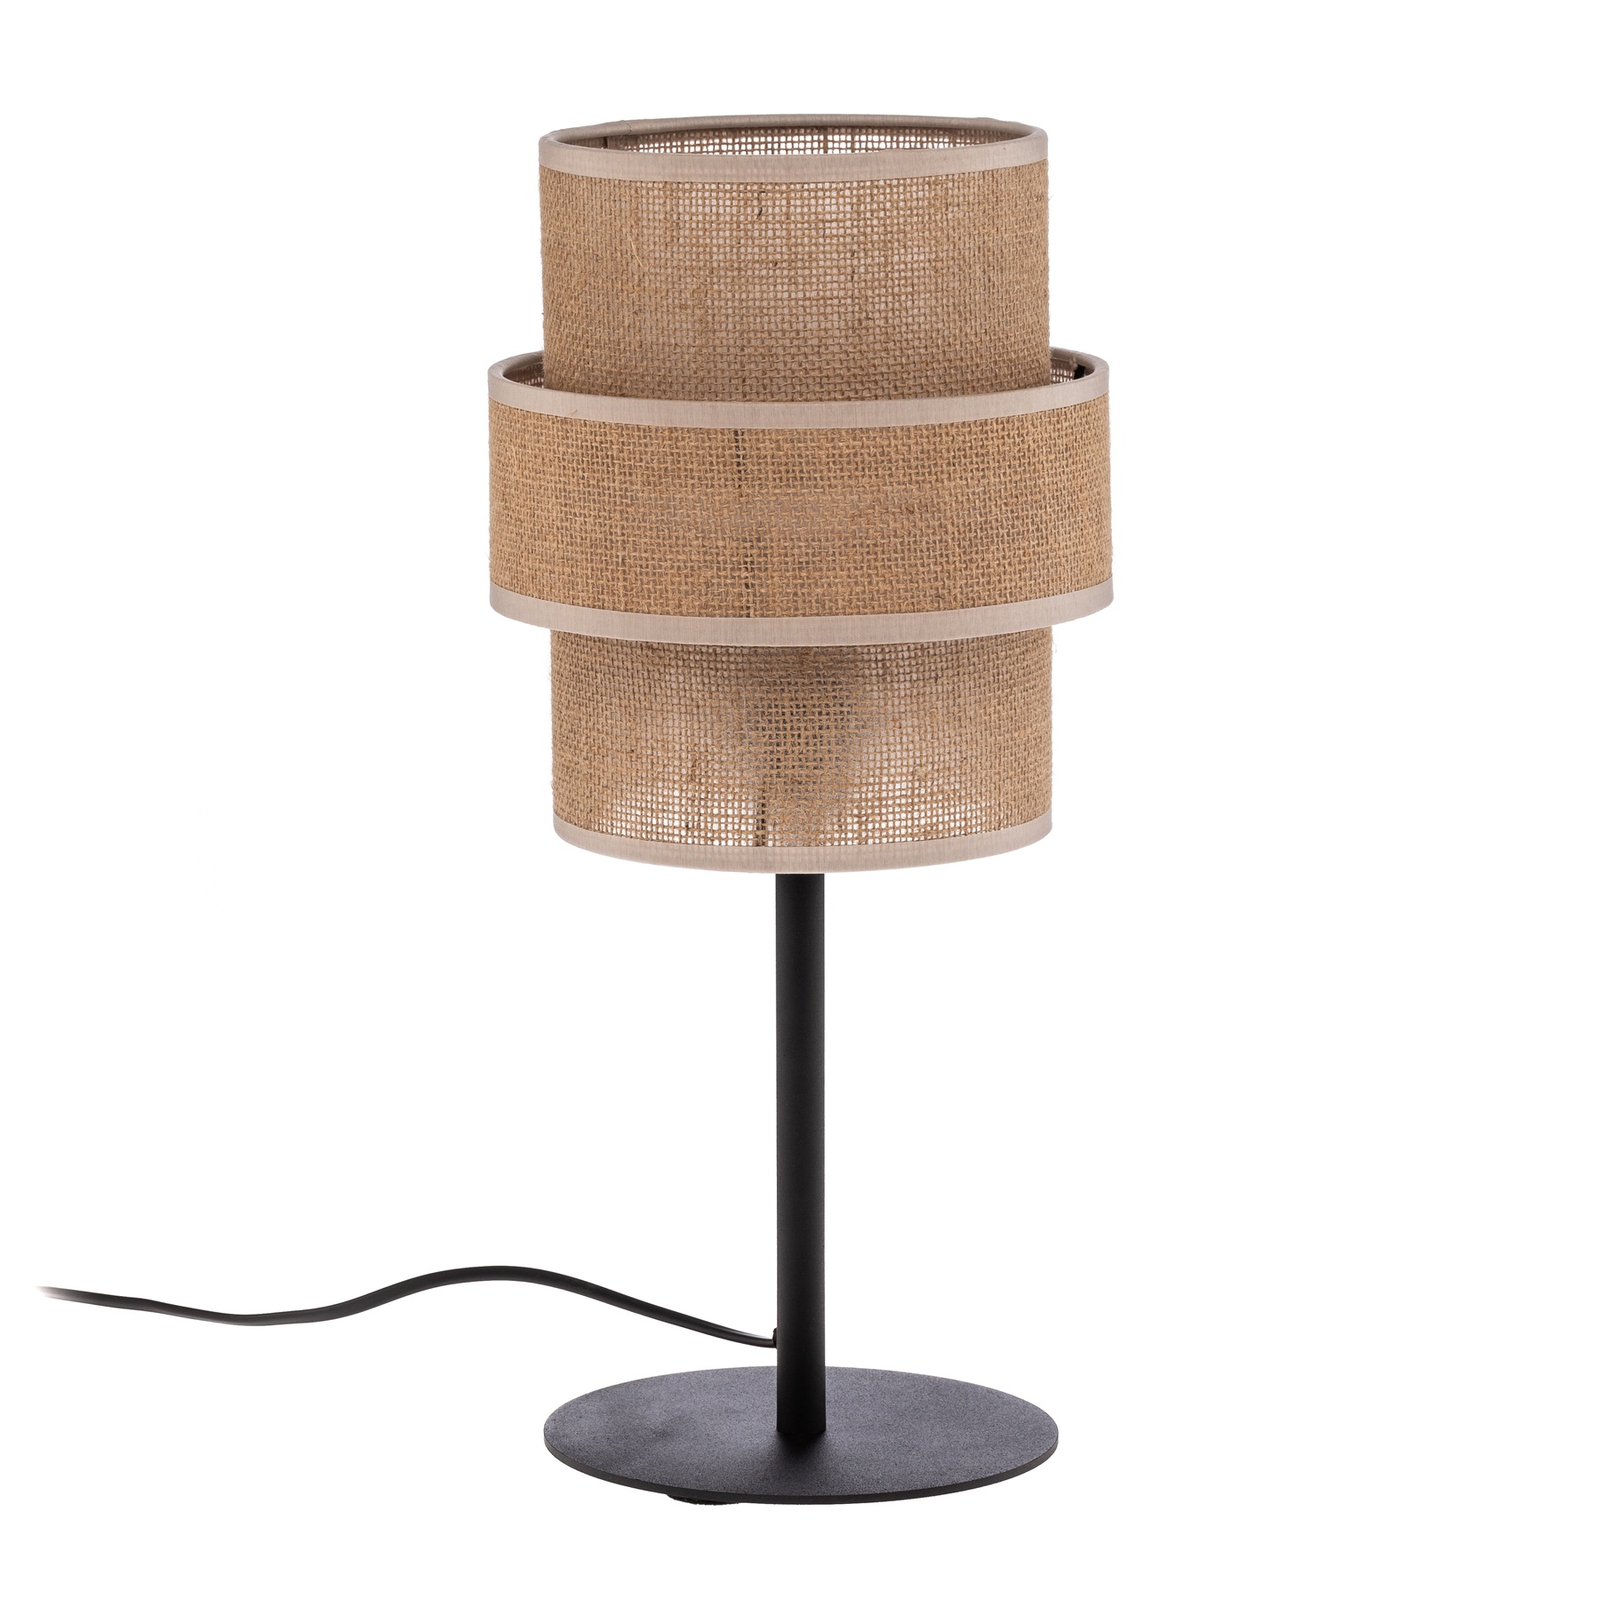 Calisto table lamp, Jute, natural brown, height 38 cm